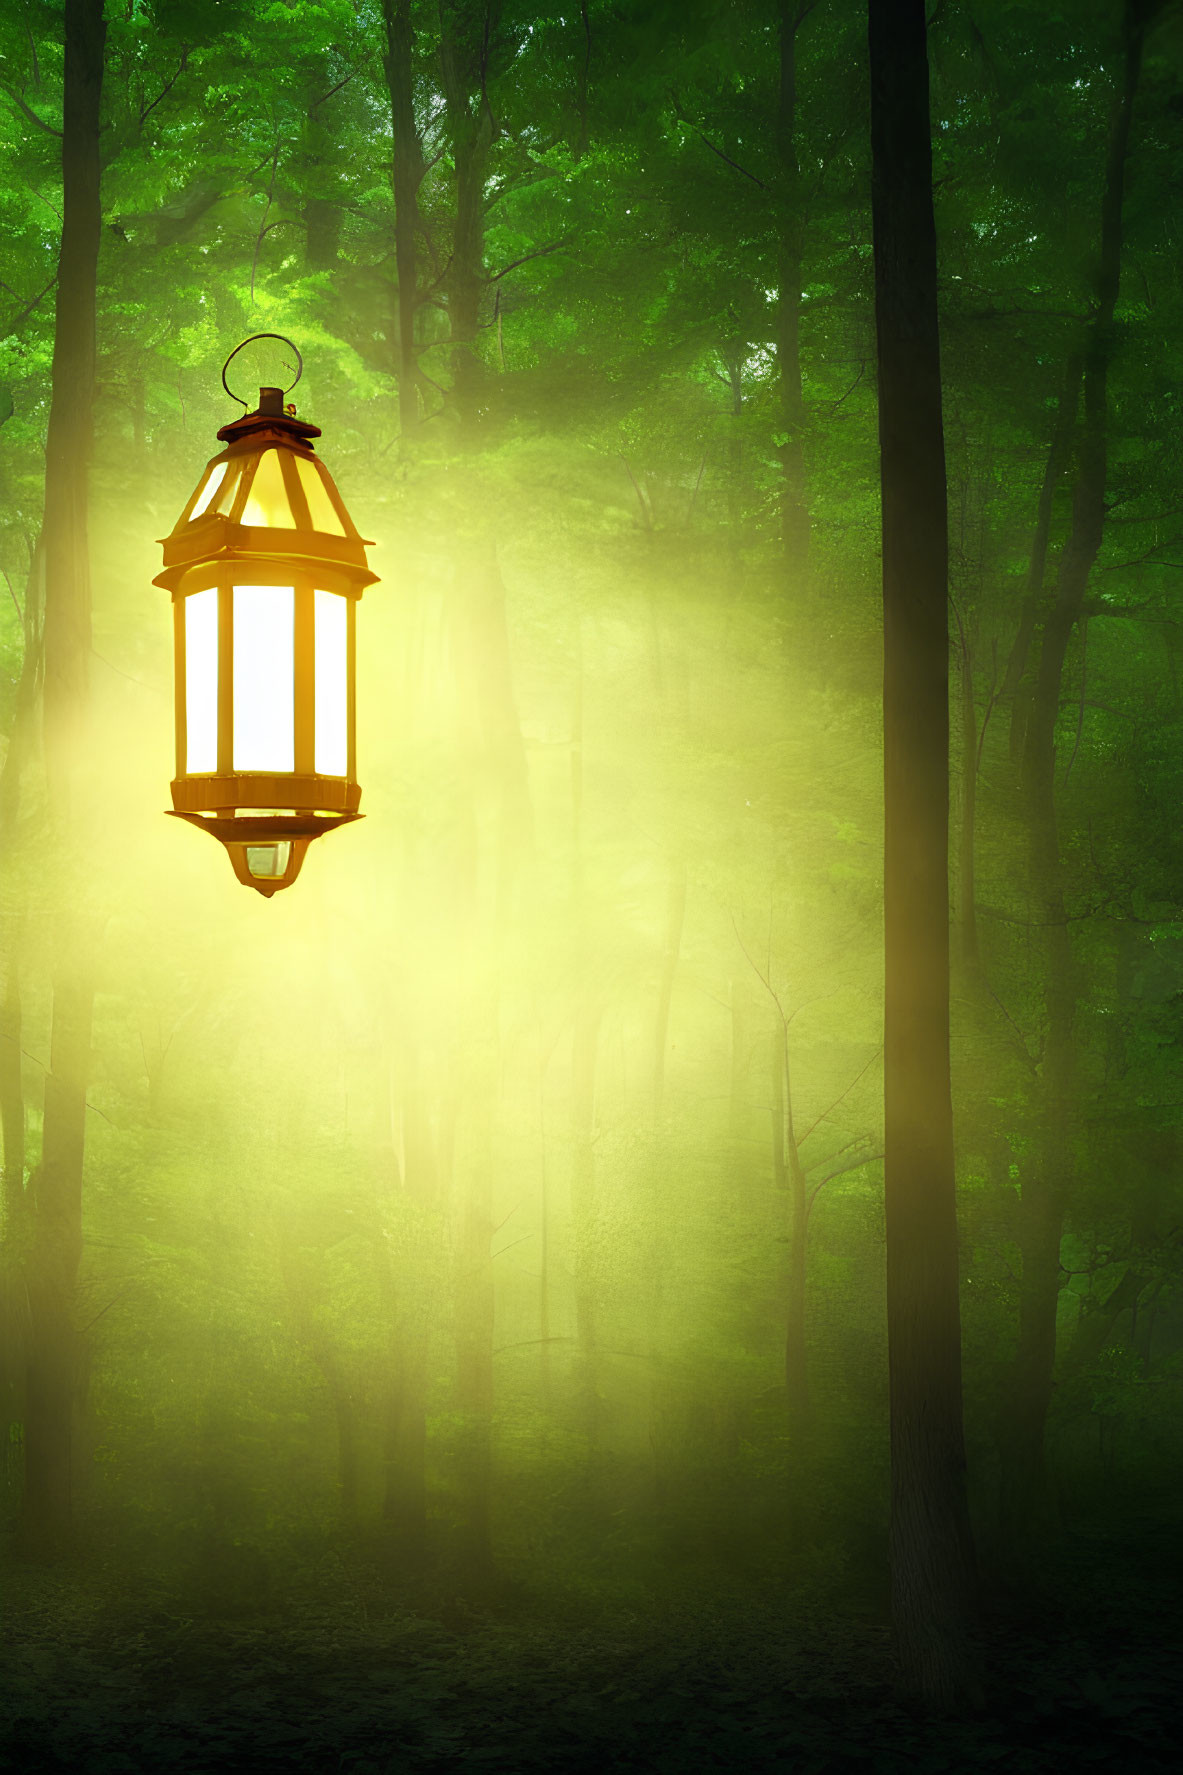 Illuminated hanging lantern in misty green forest